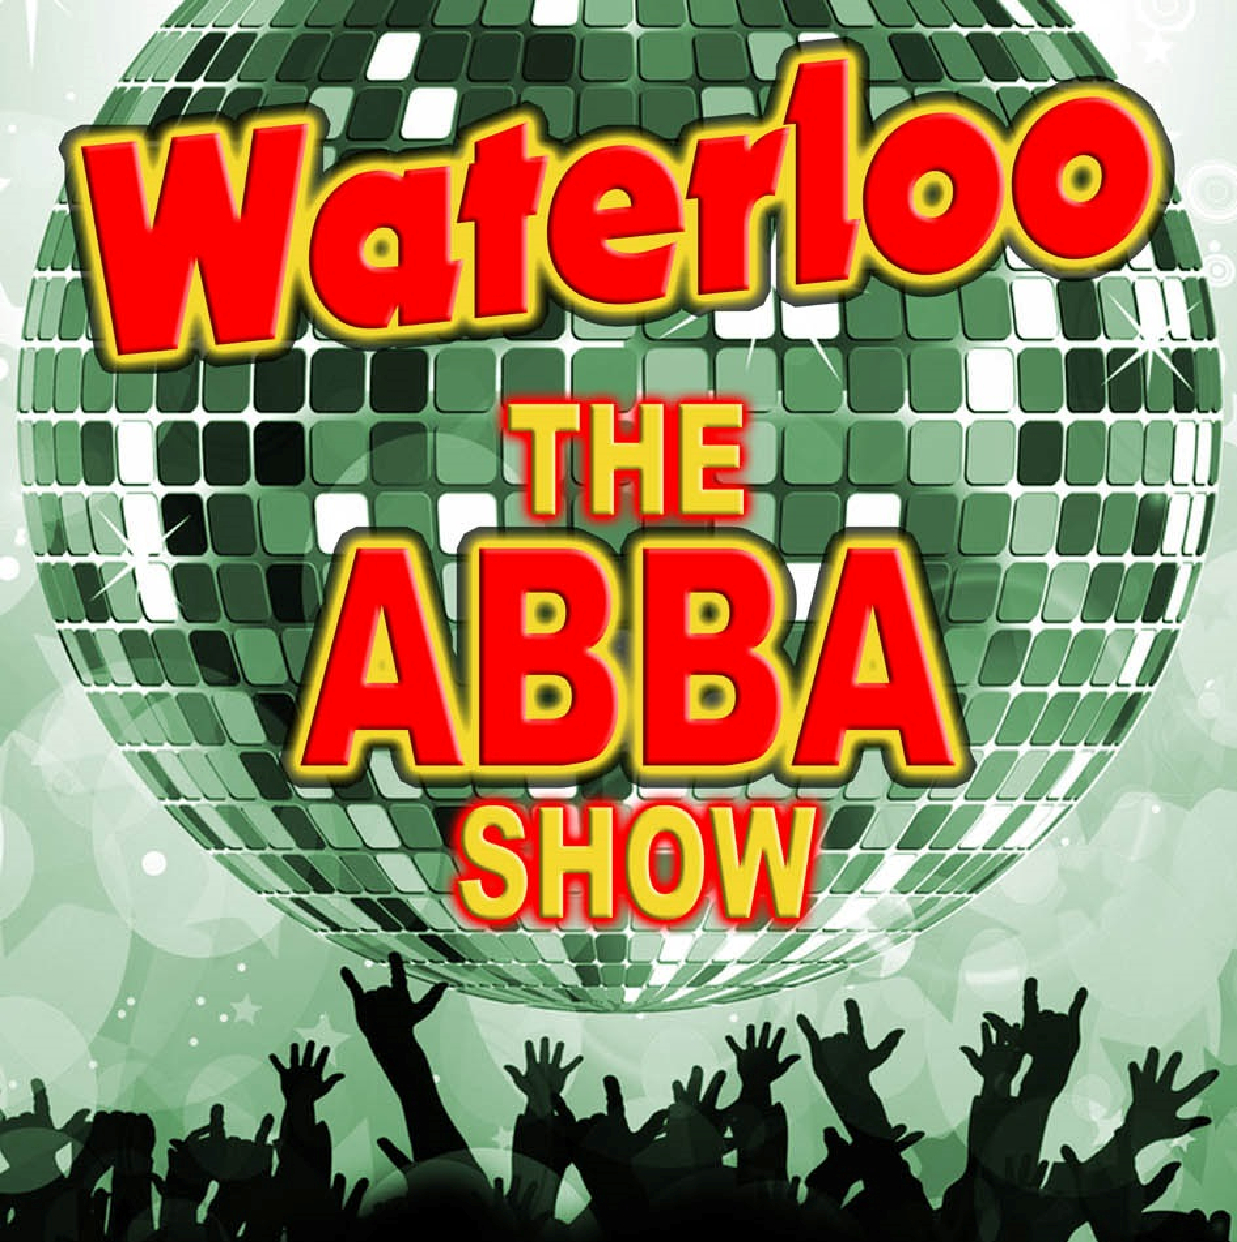 WATERLOO - THE ABBA SHOW